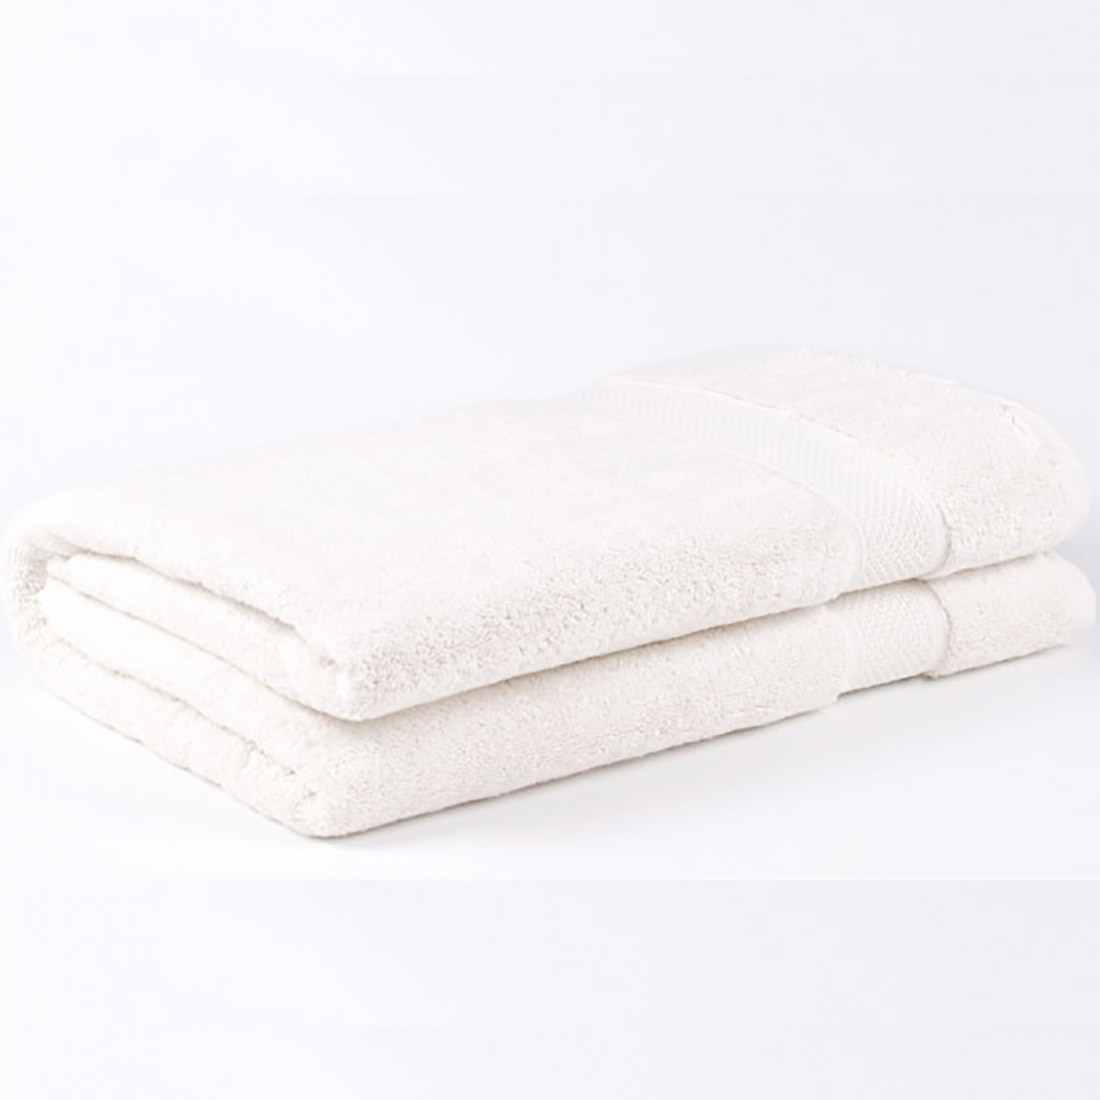 OrganicEra Organic Towel, Bozcaada